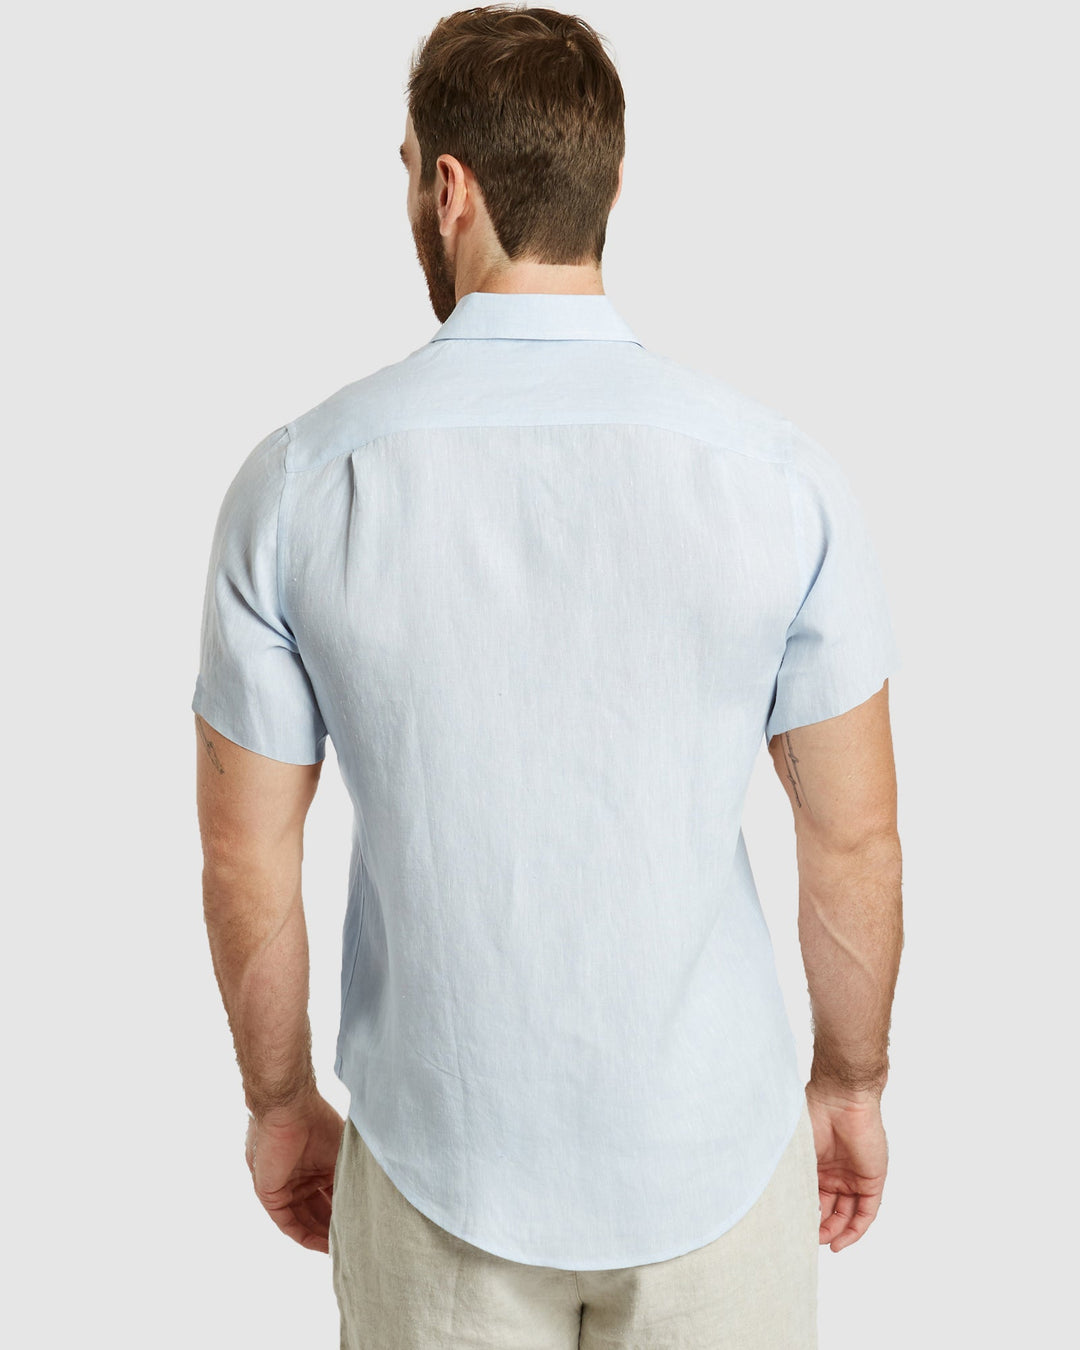 Ravello No Tuck Short Sleeve Sky Linen Shirt - Slim Fit